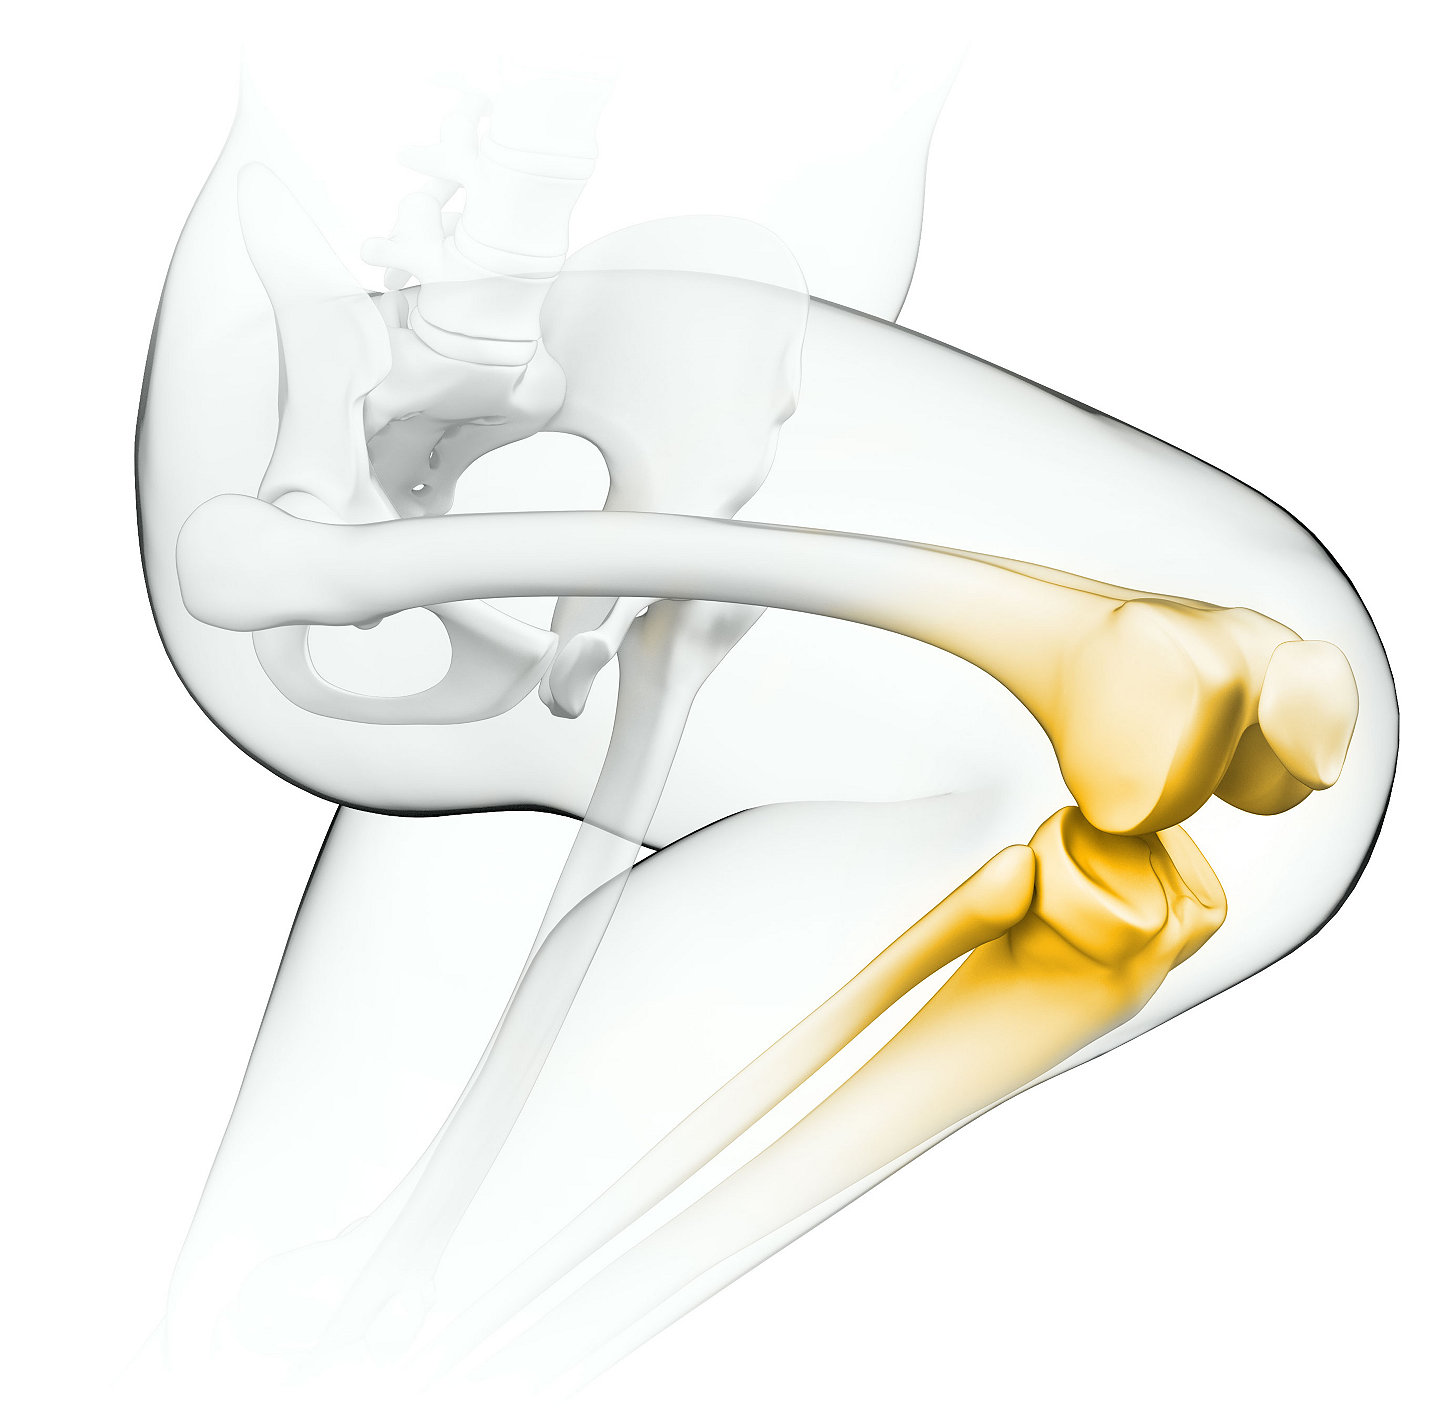 Precision-knee-anatomy